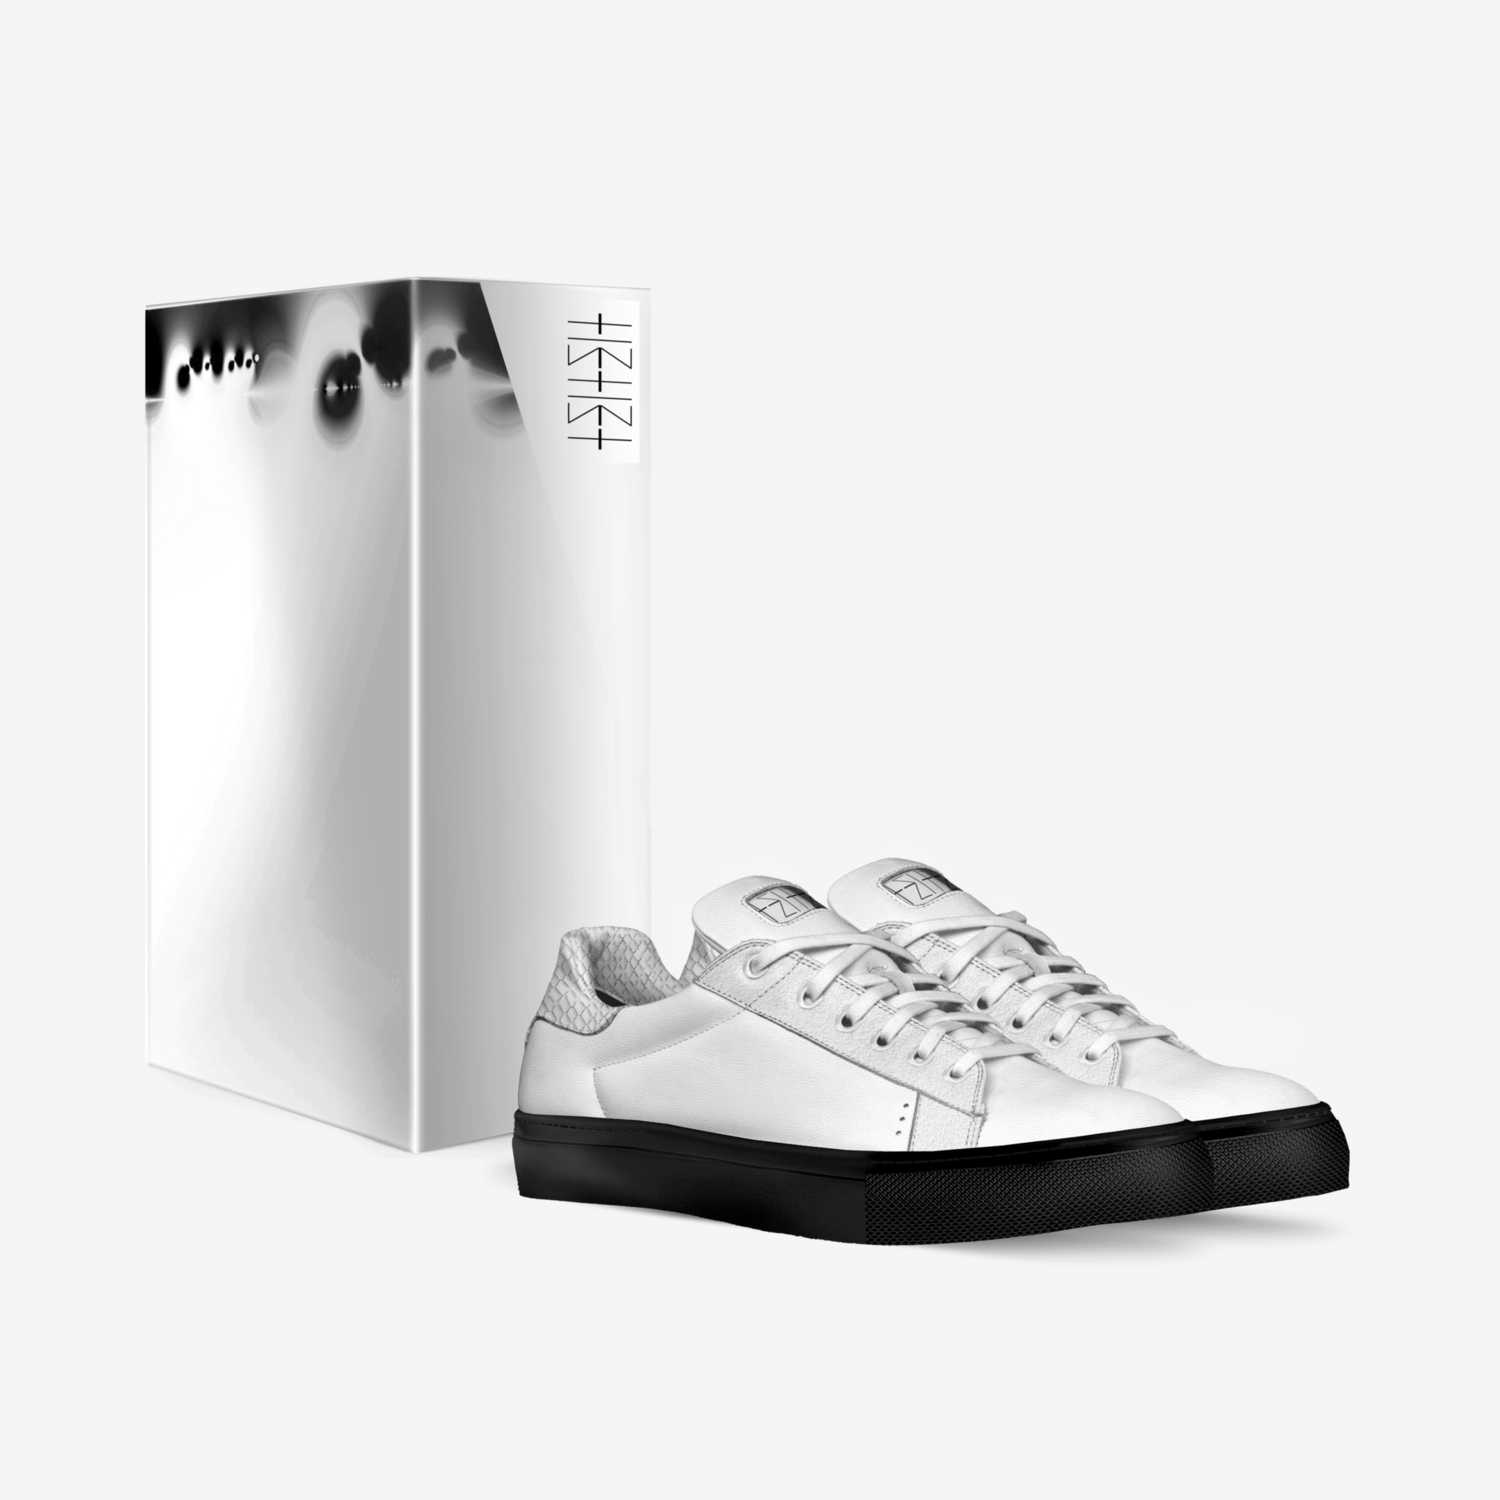 MAL'AKH FOUR custom made in Italy shoes by Ricardo Yoreh Ladino | Box view